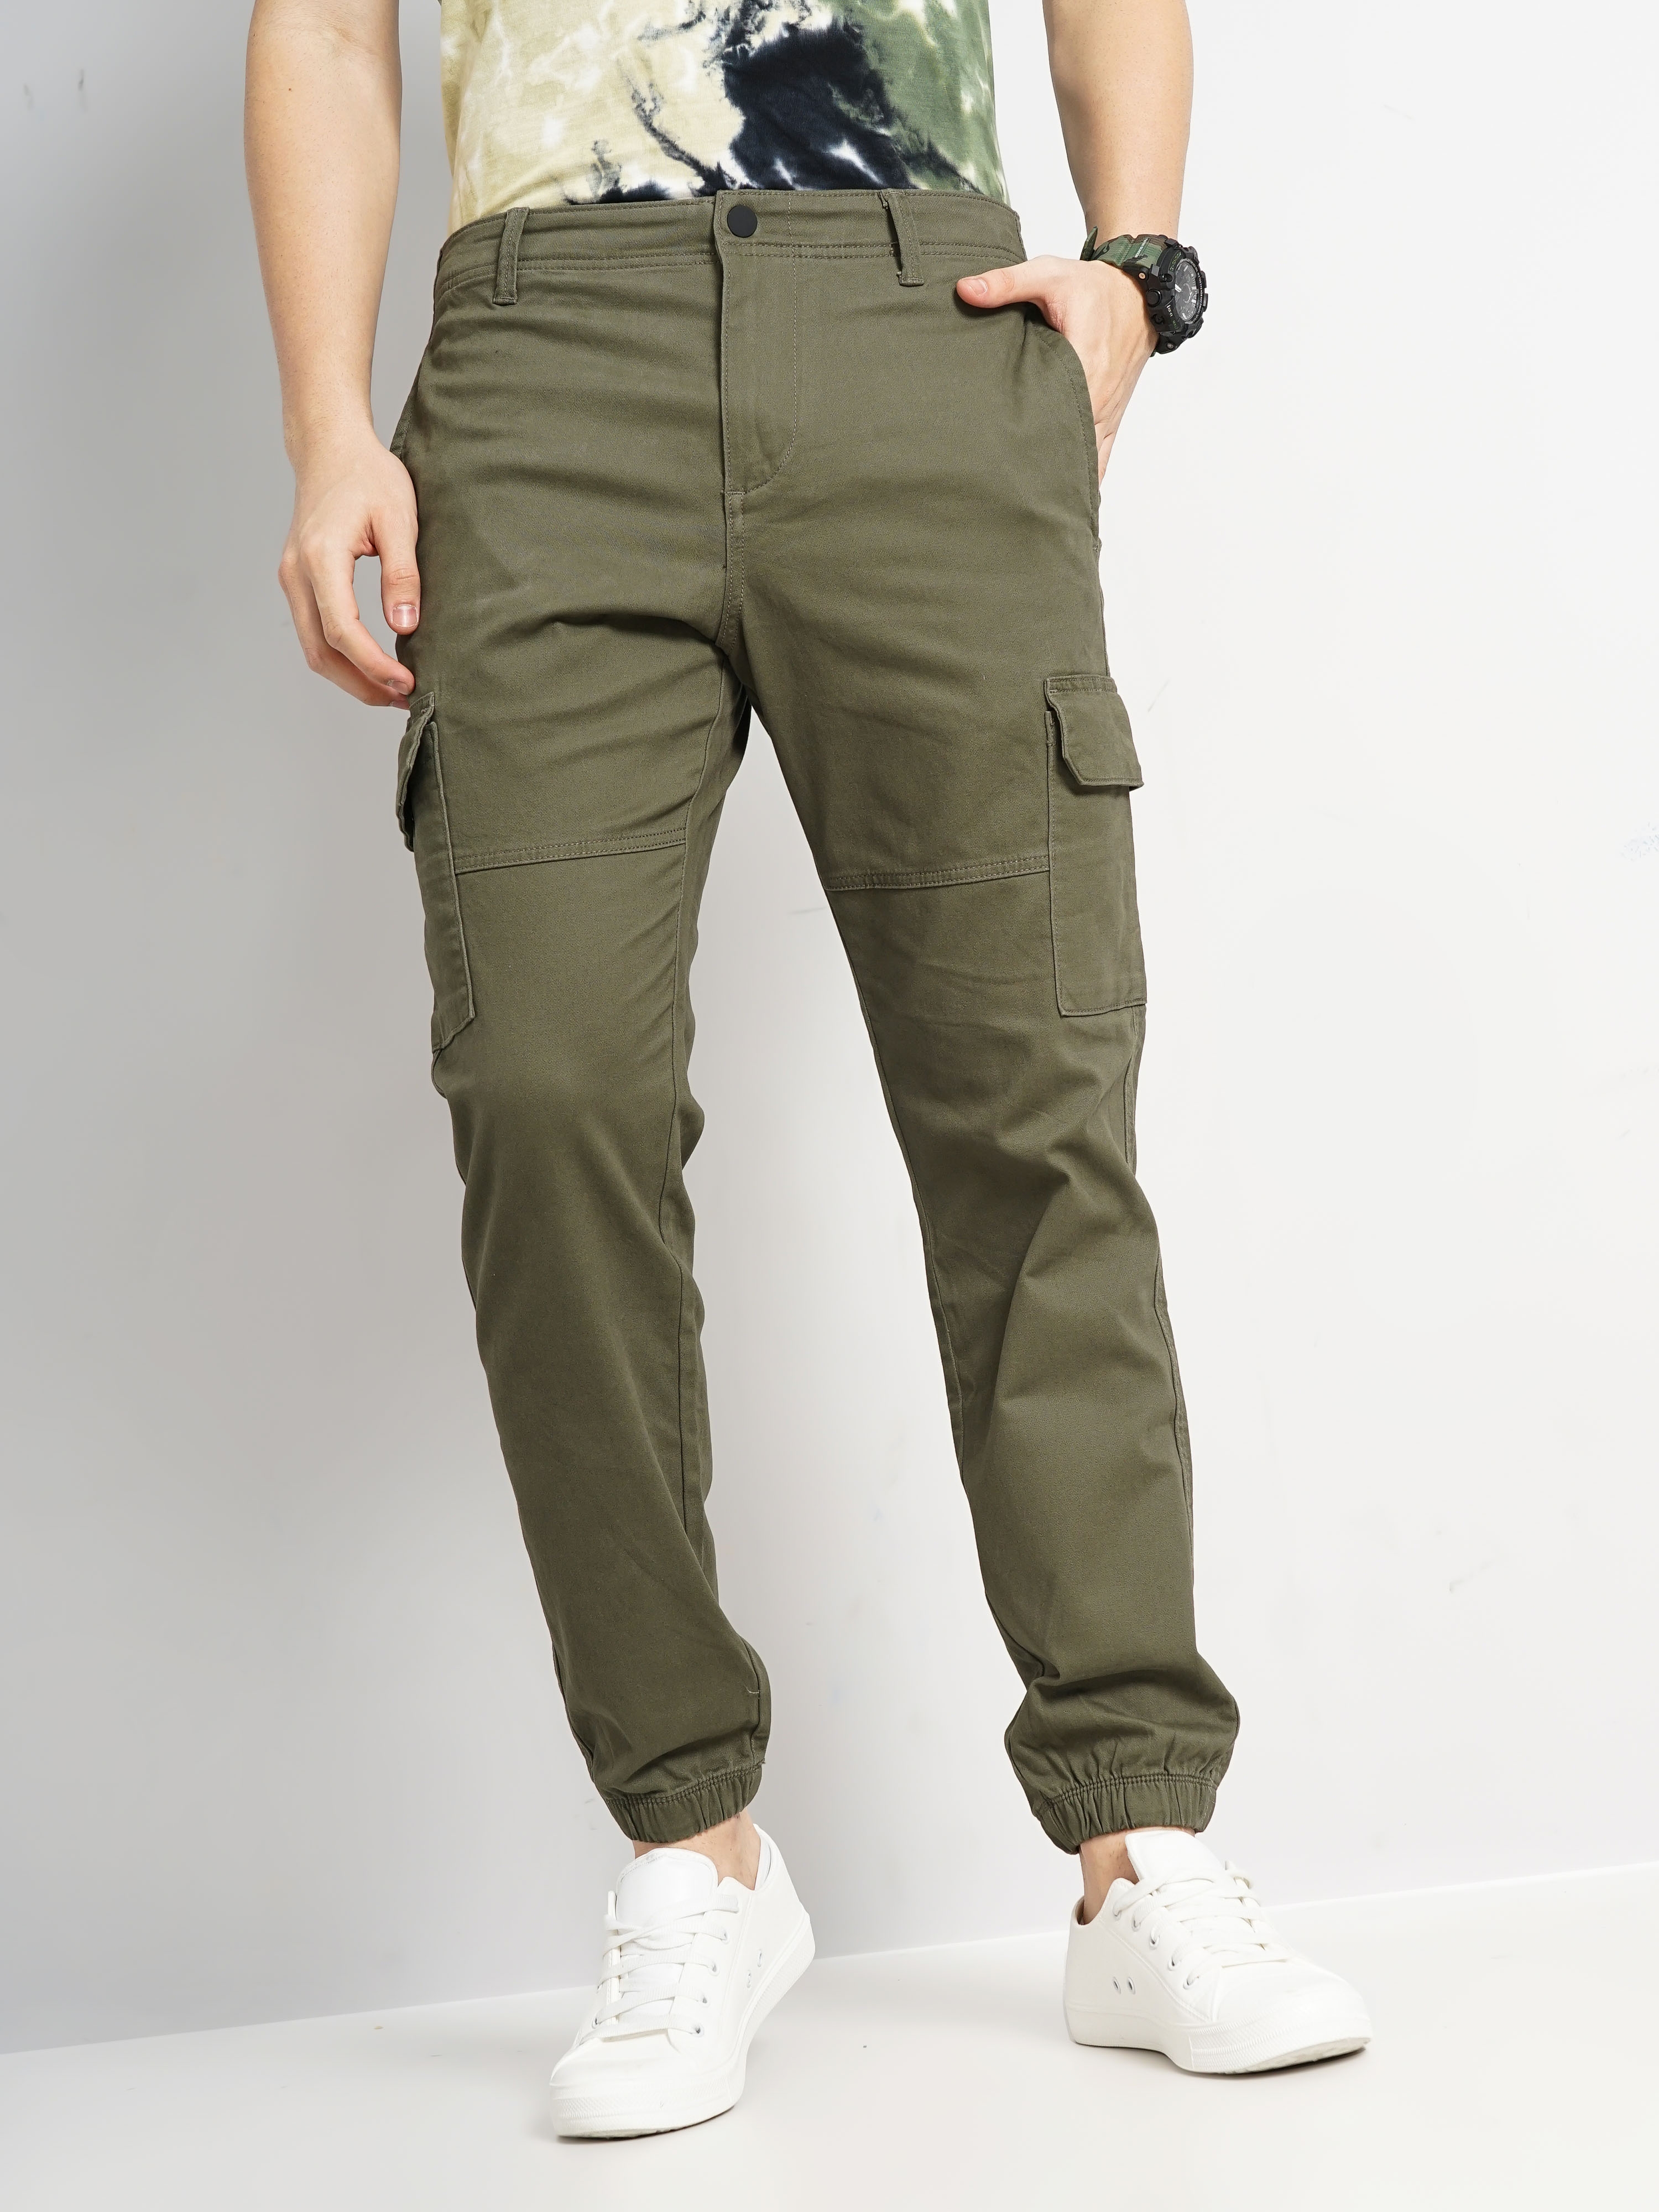 Buy Men Green Regular Fit Trouser Online in India - Monte Carlo